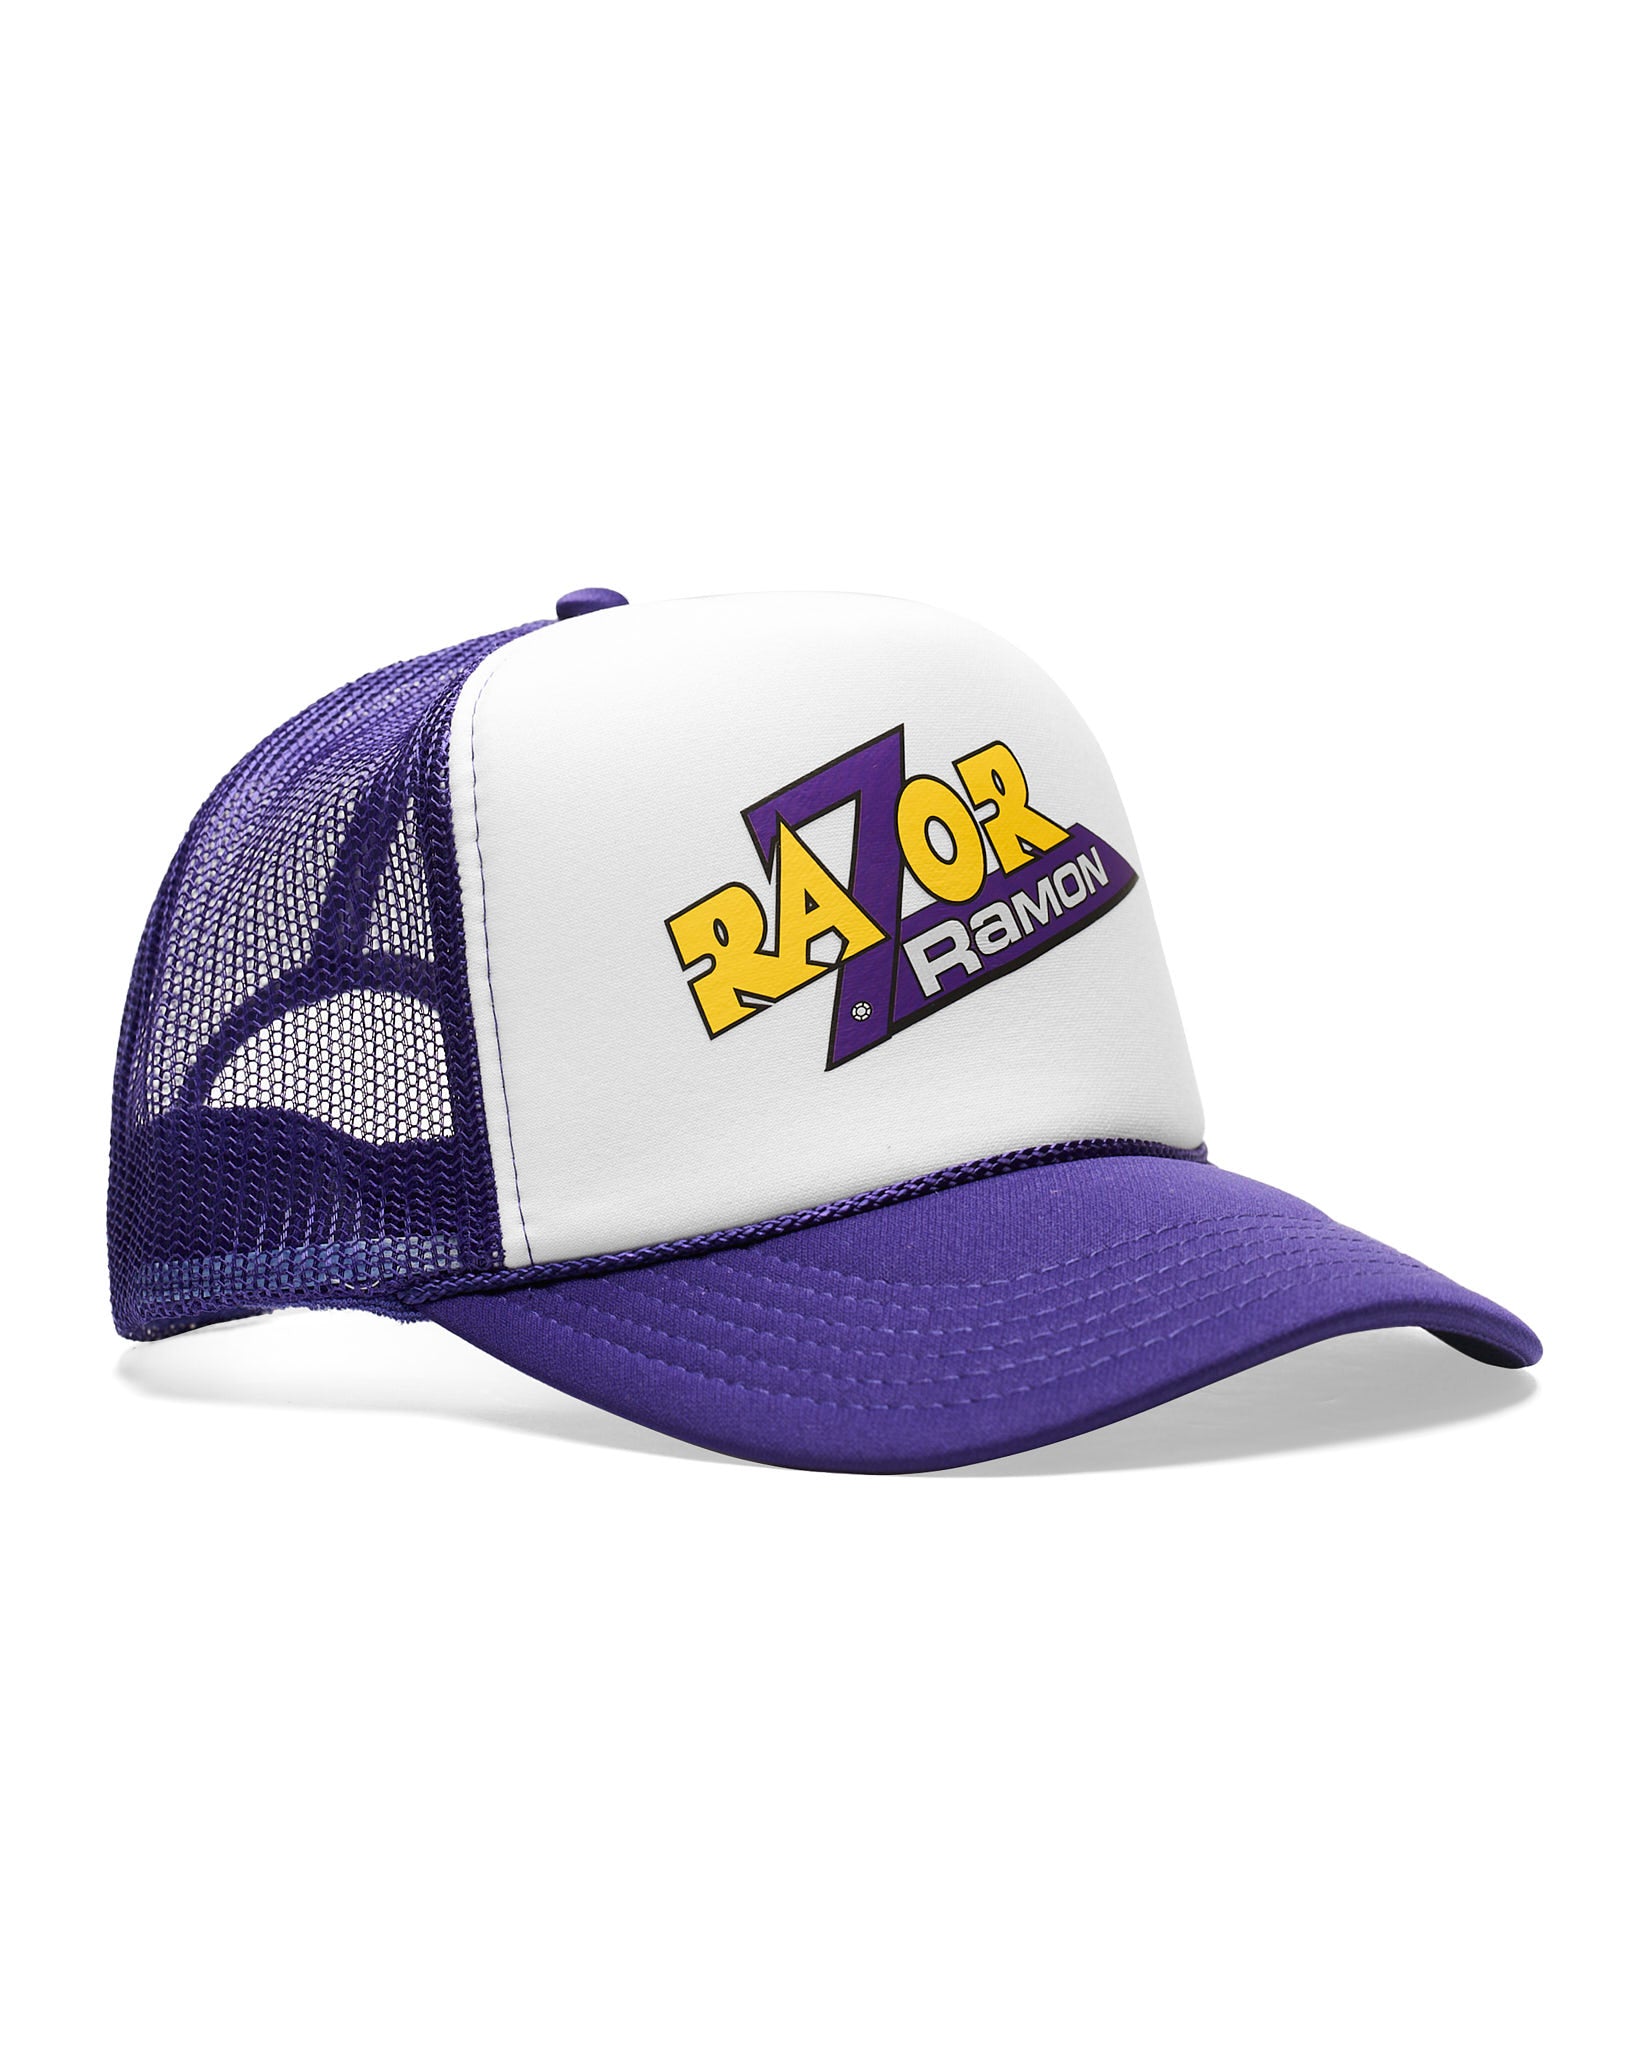 Razor Ramon Purple Trucker Hat